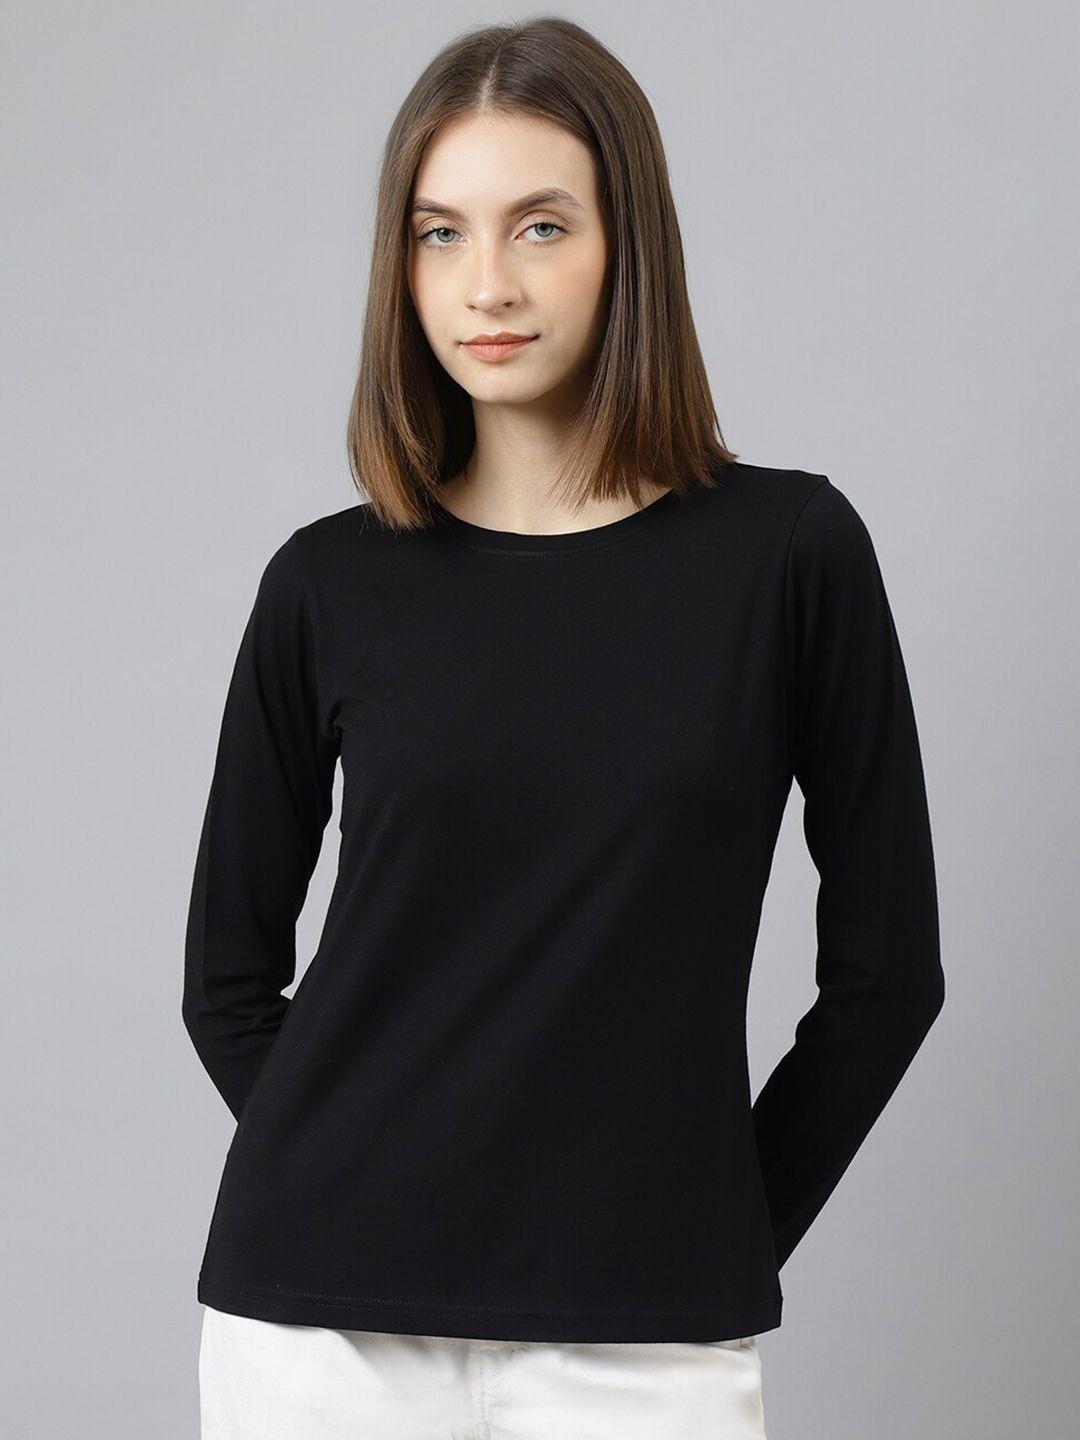 besimple women black monochrome t-shirt